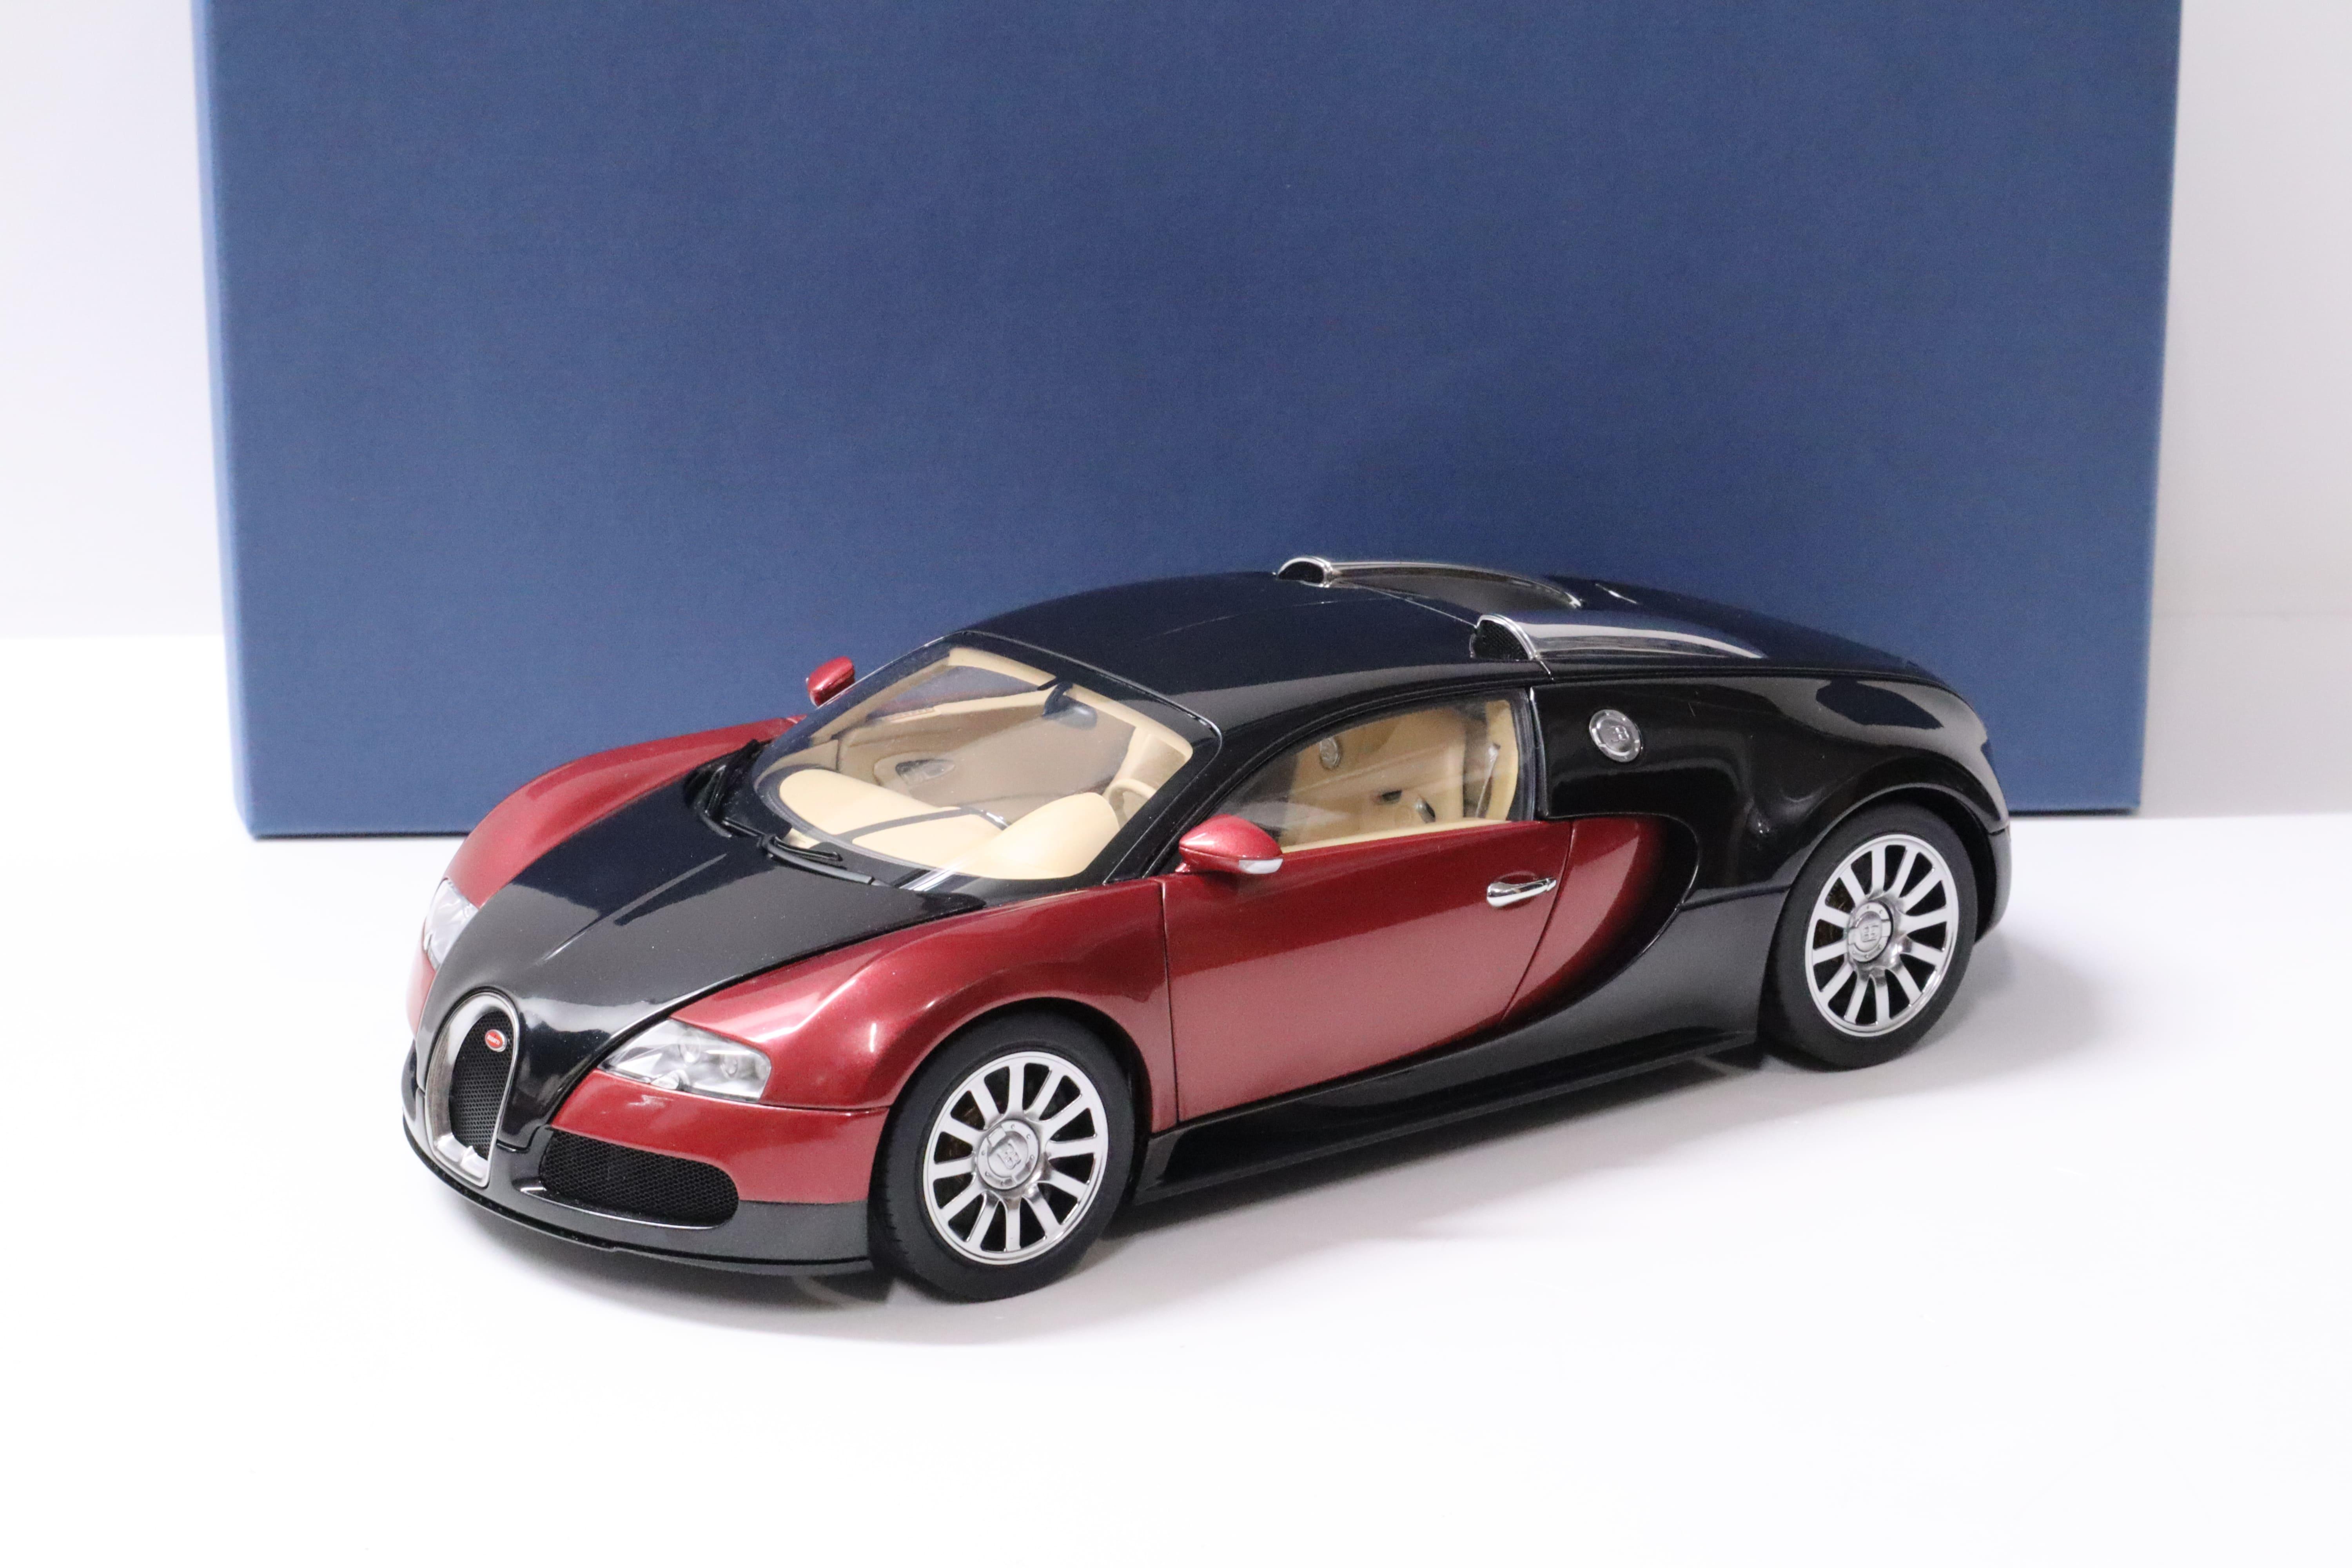 1:18 AUTOart Bugatti EB 16.4 Veyron Production Car #001 black/ red 2006